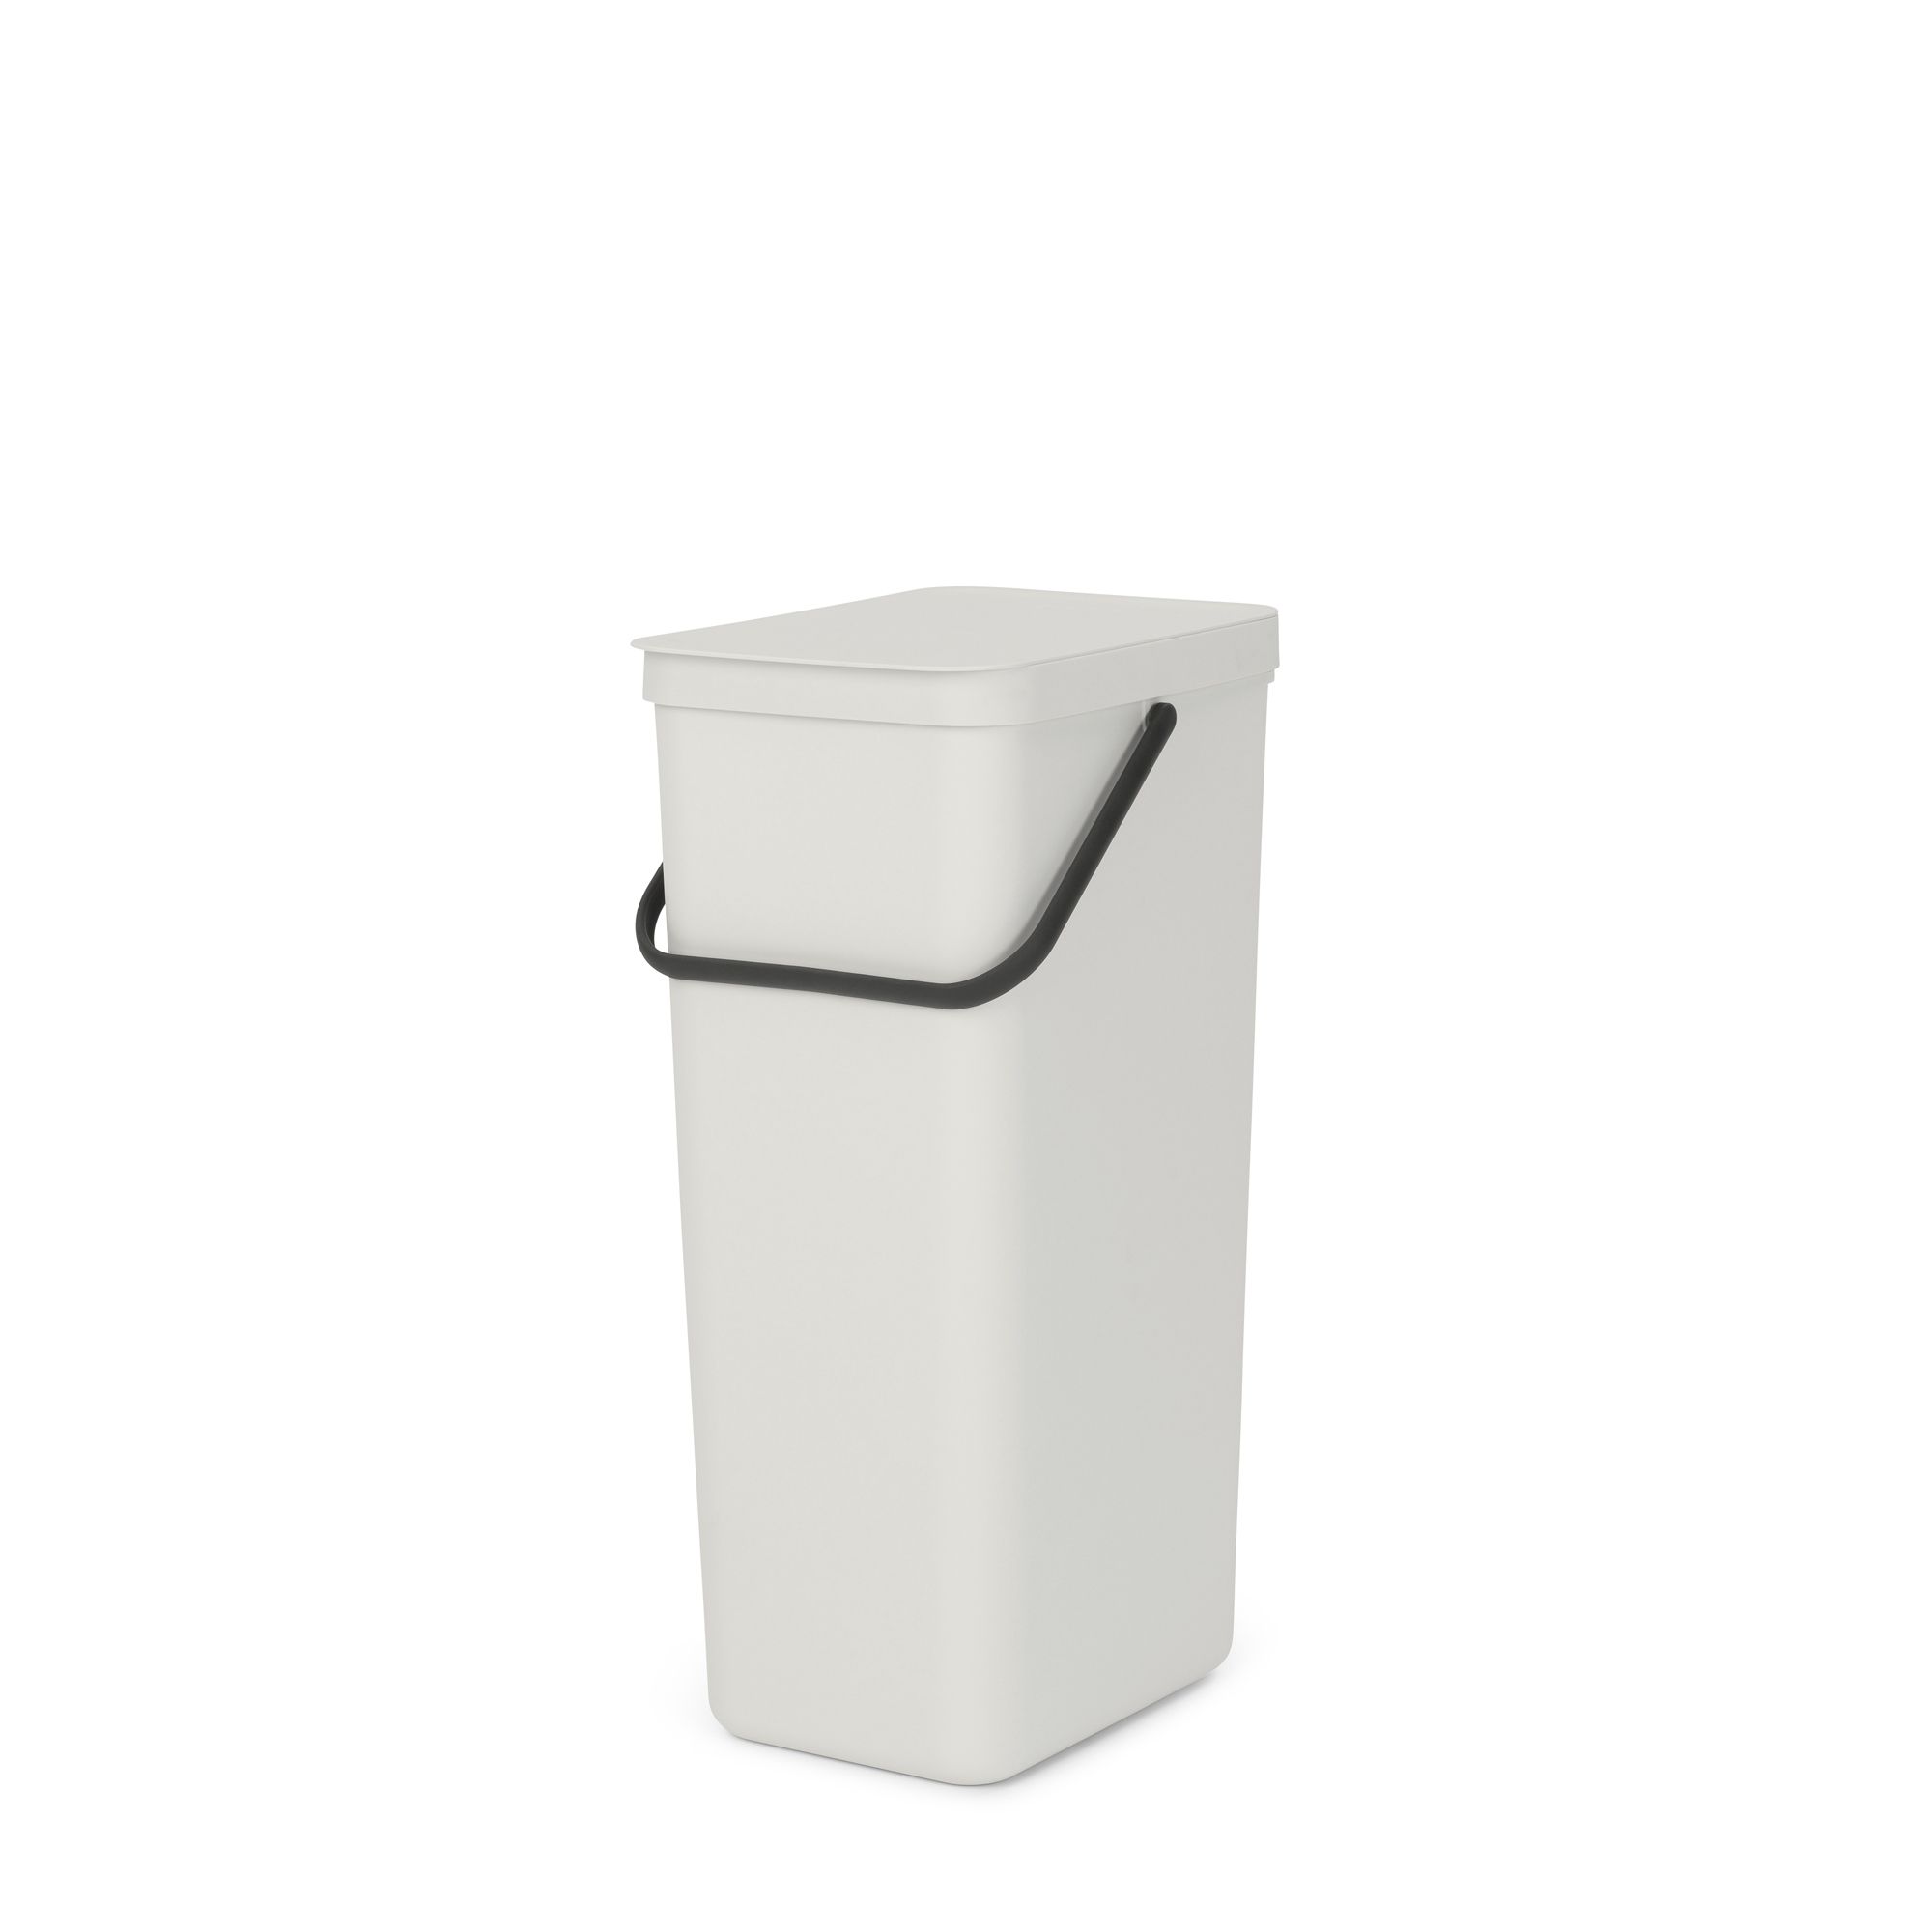 Brabantia Sort & Go Light Grey Recycling bin - 40L